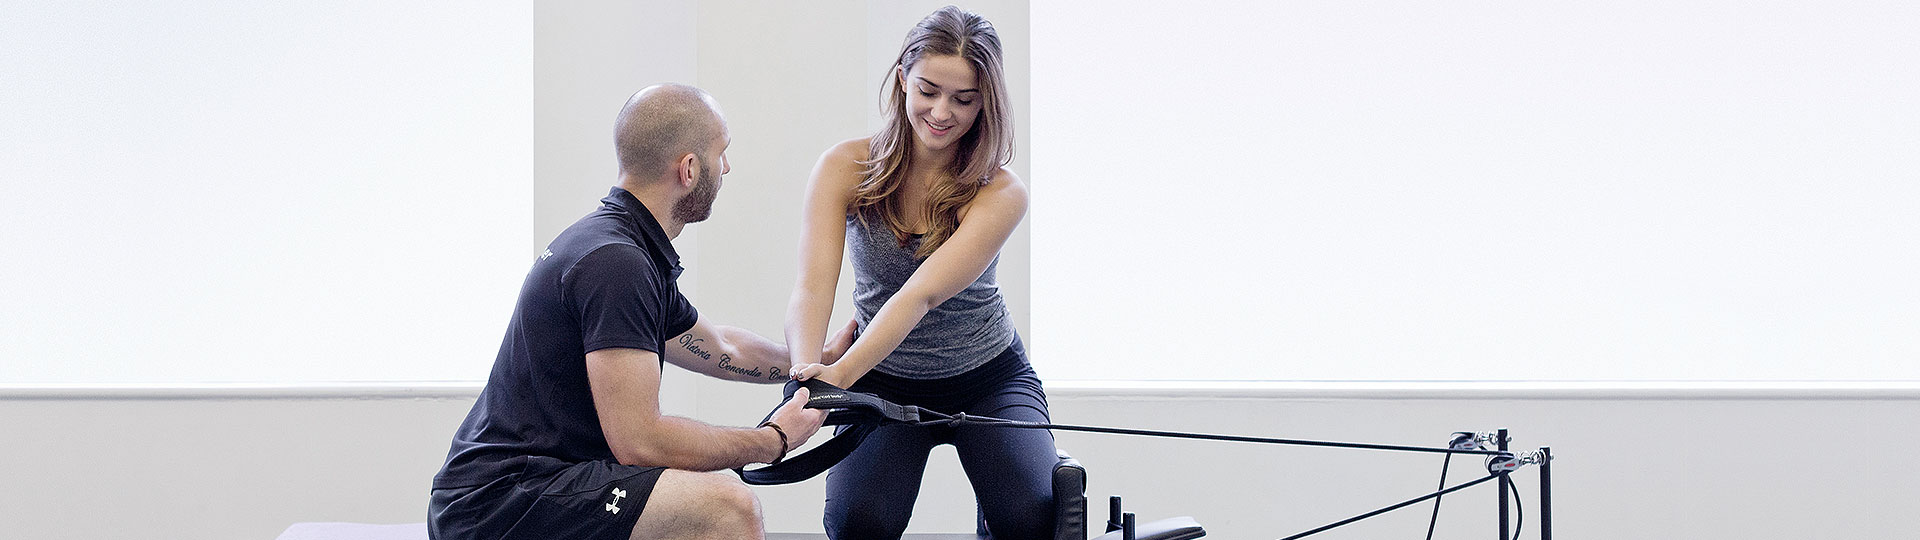 Ten Health & Fitness Personal Trainer Jobs in London